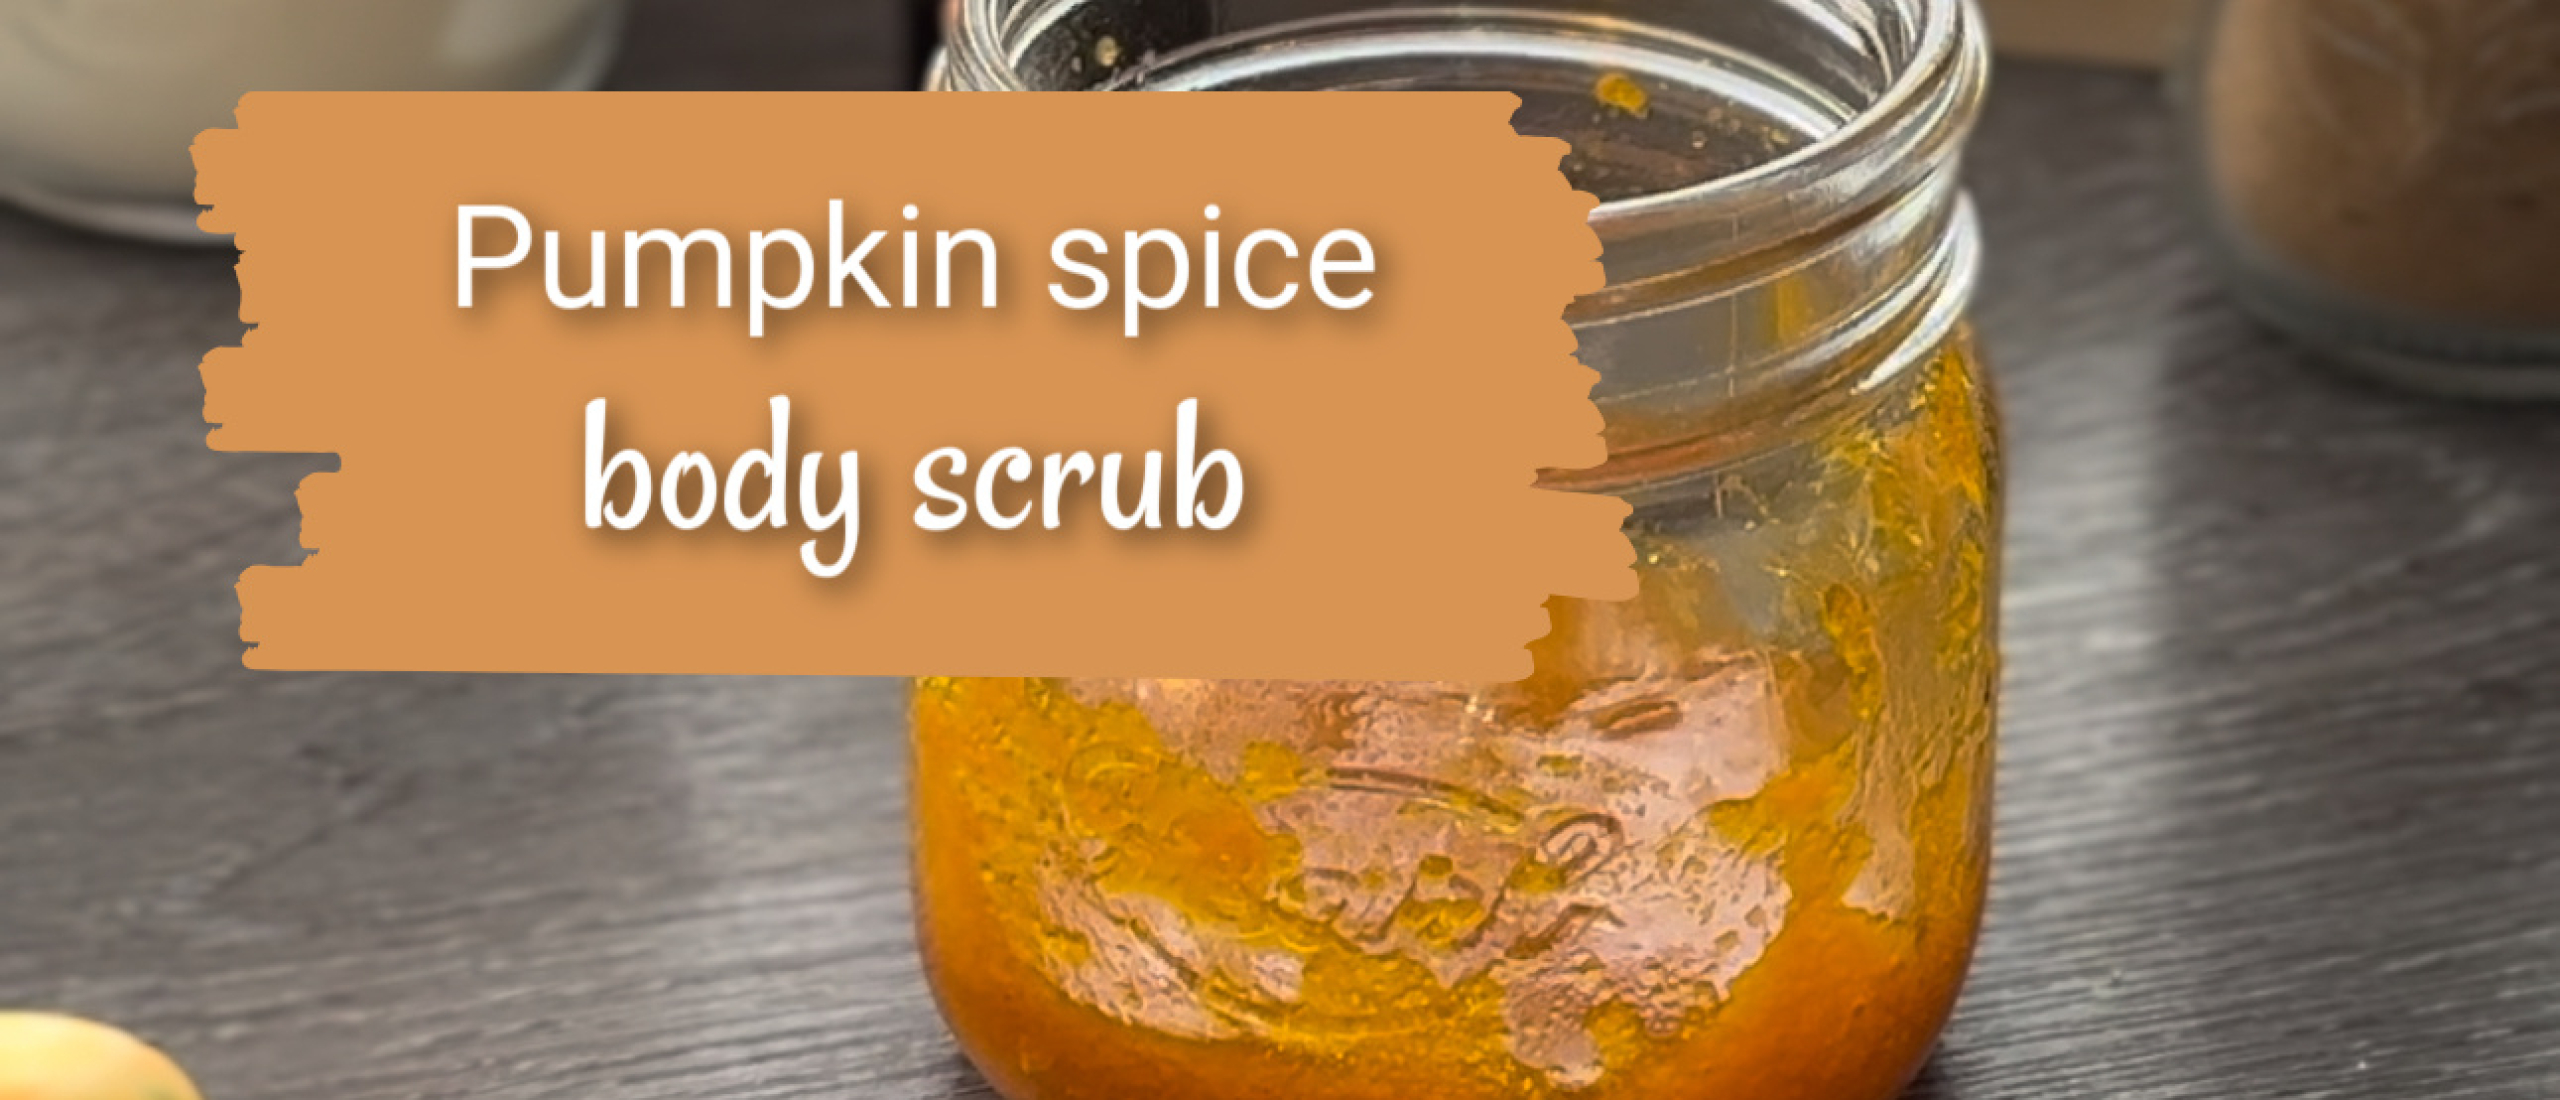 Pumpkin spice body scrub